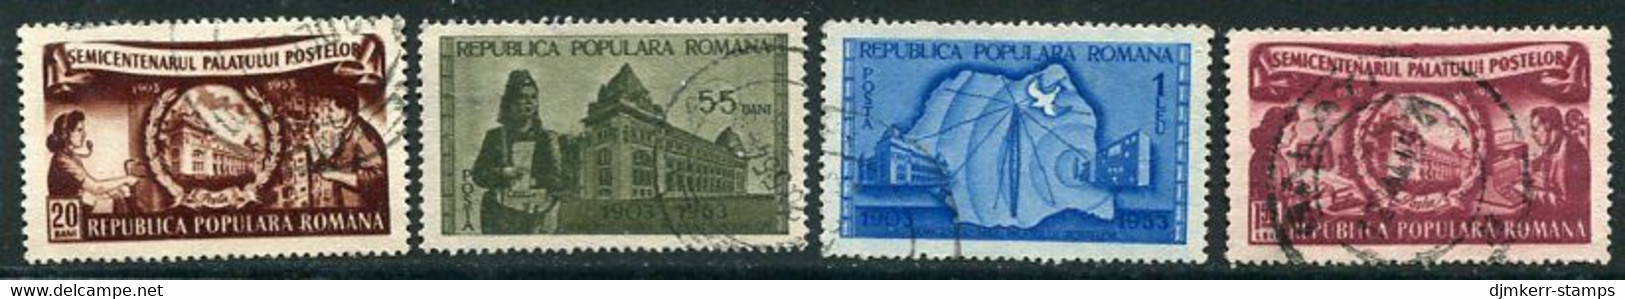 ROMANIA 1953 Post Office Building Used.  Michel 1445-48 - Gebraucht